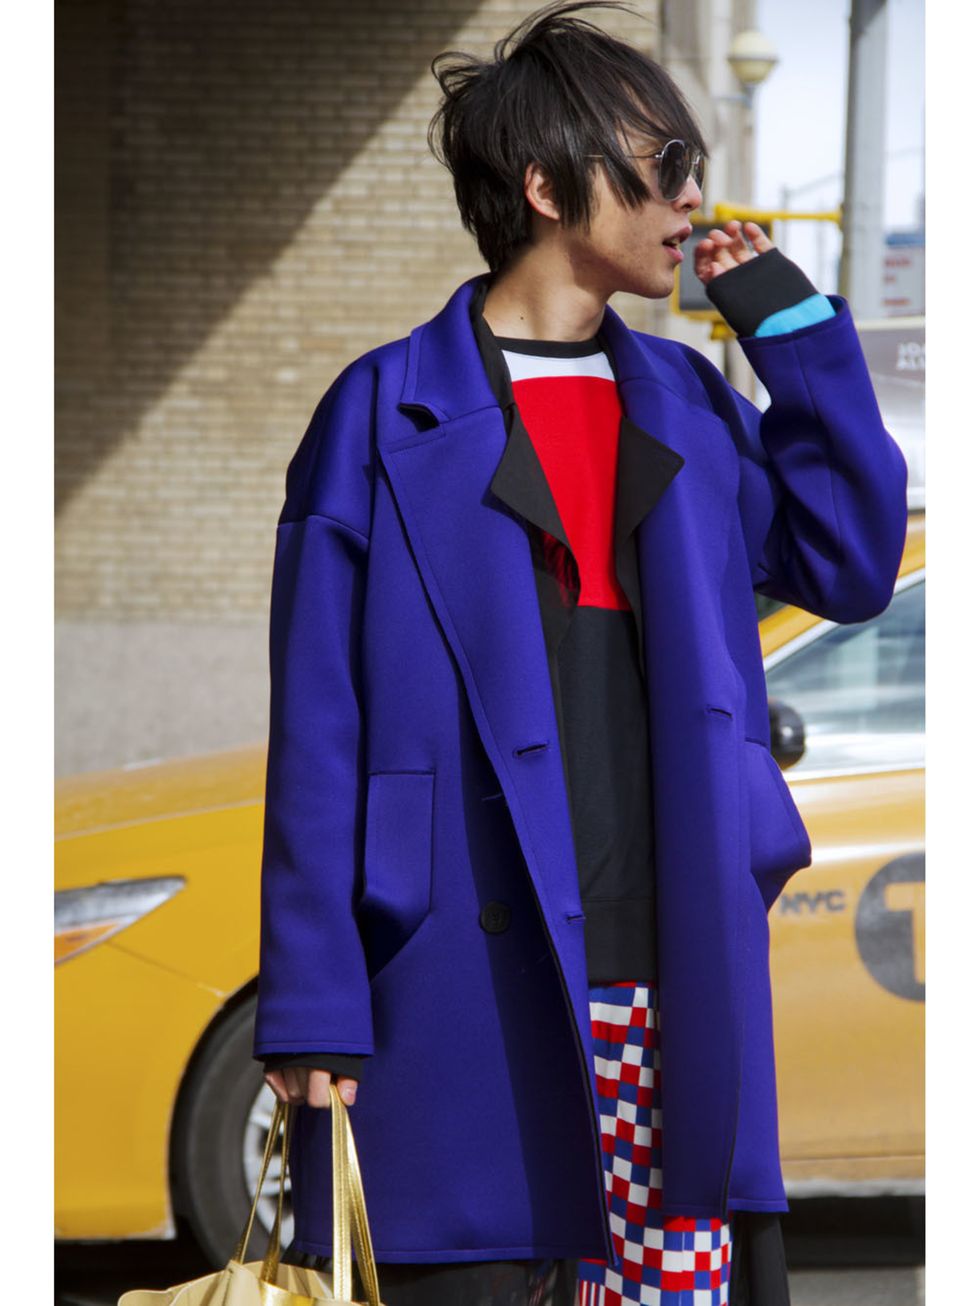 Outerwear, Electric blue, Street fashion, Blazer, Overcoat, Cobalt blue, Sunglasses, Costume, Costume design, Frock coat, 